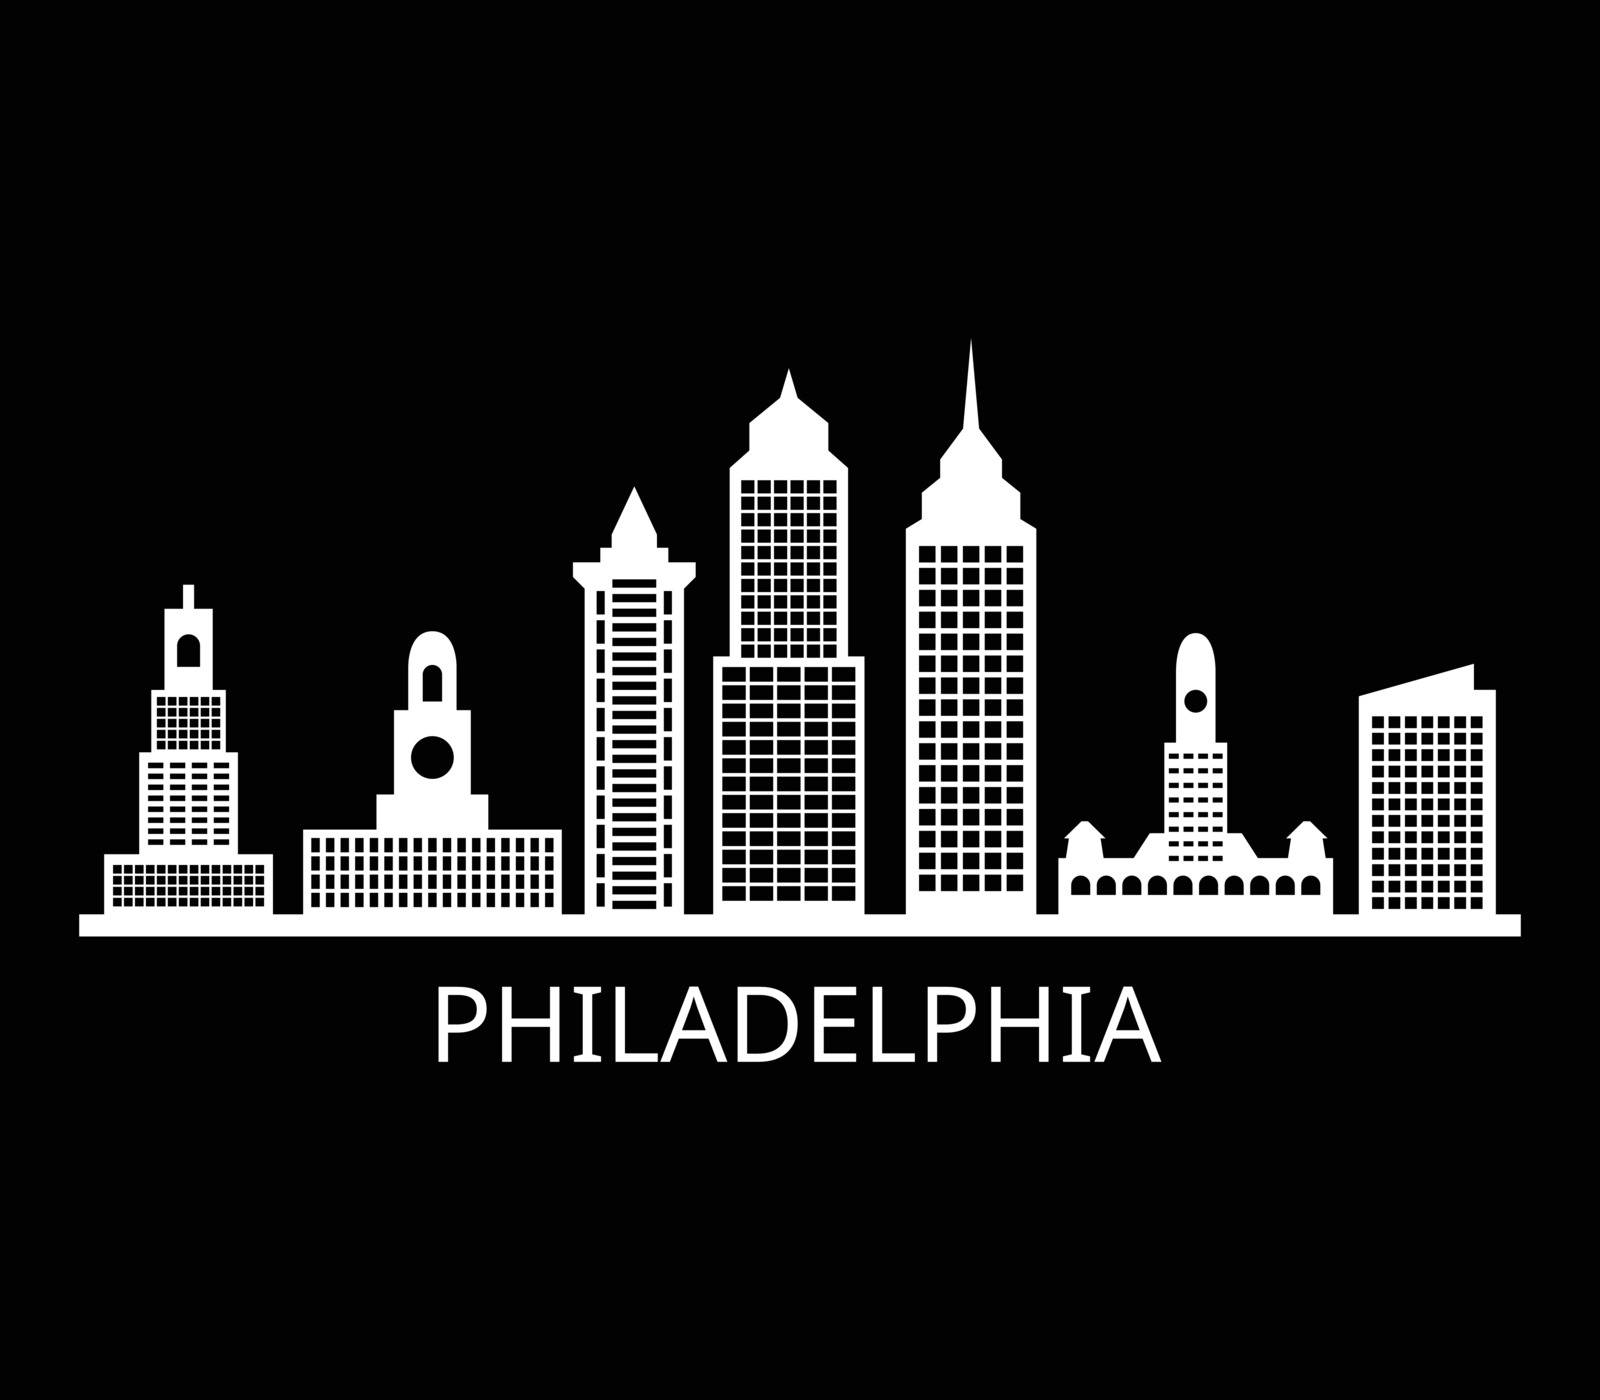 Philadelphia skyline by Mark1987